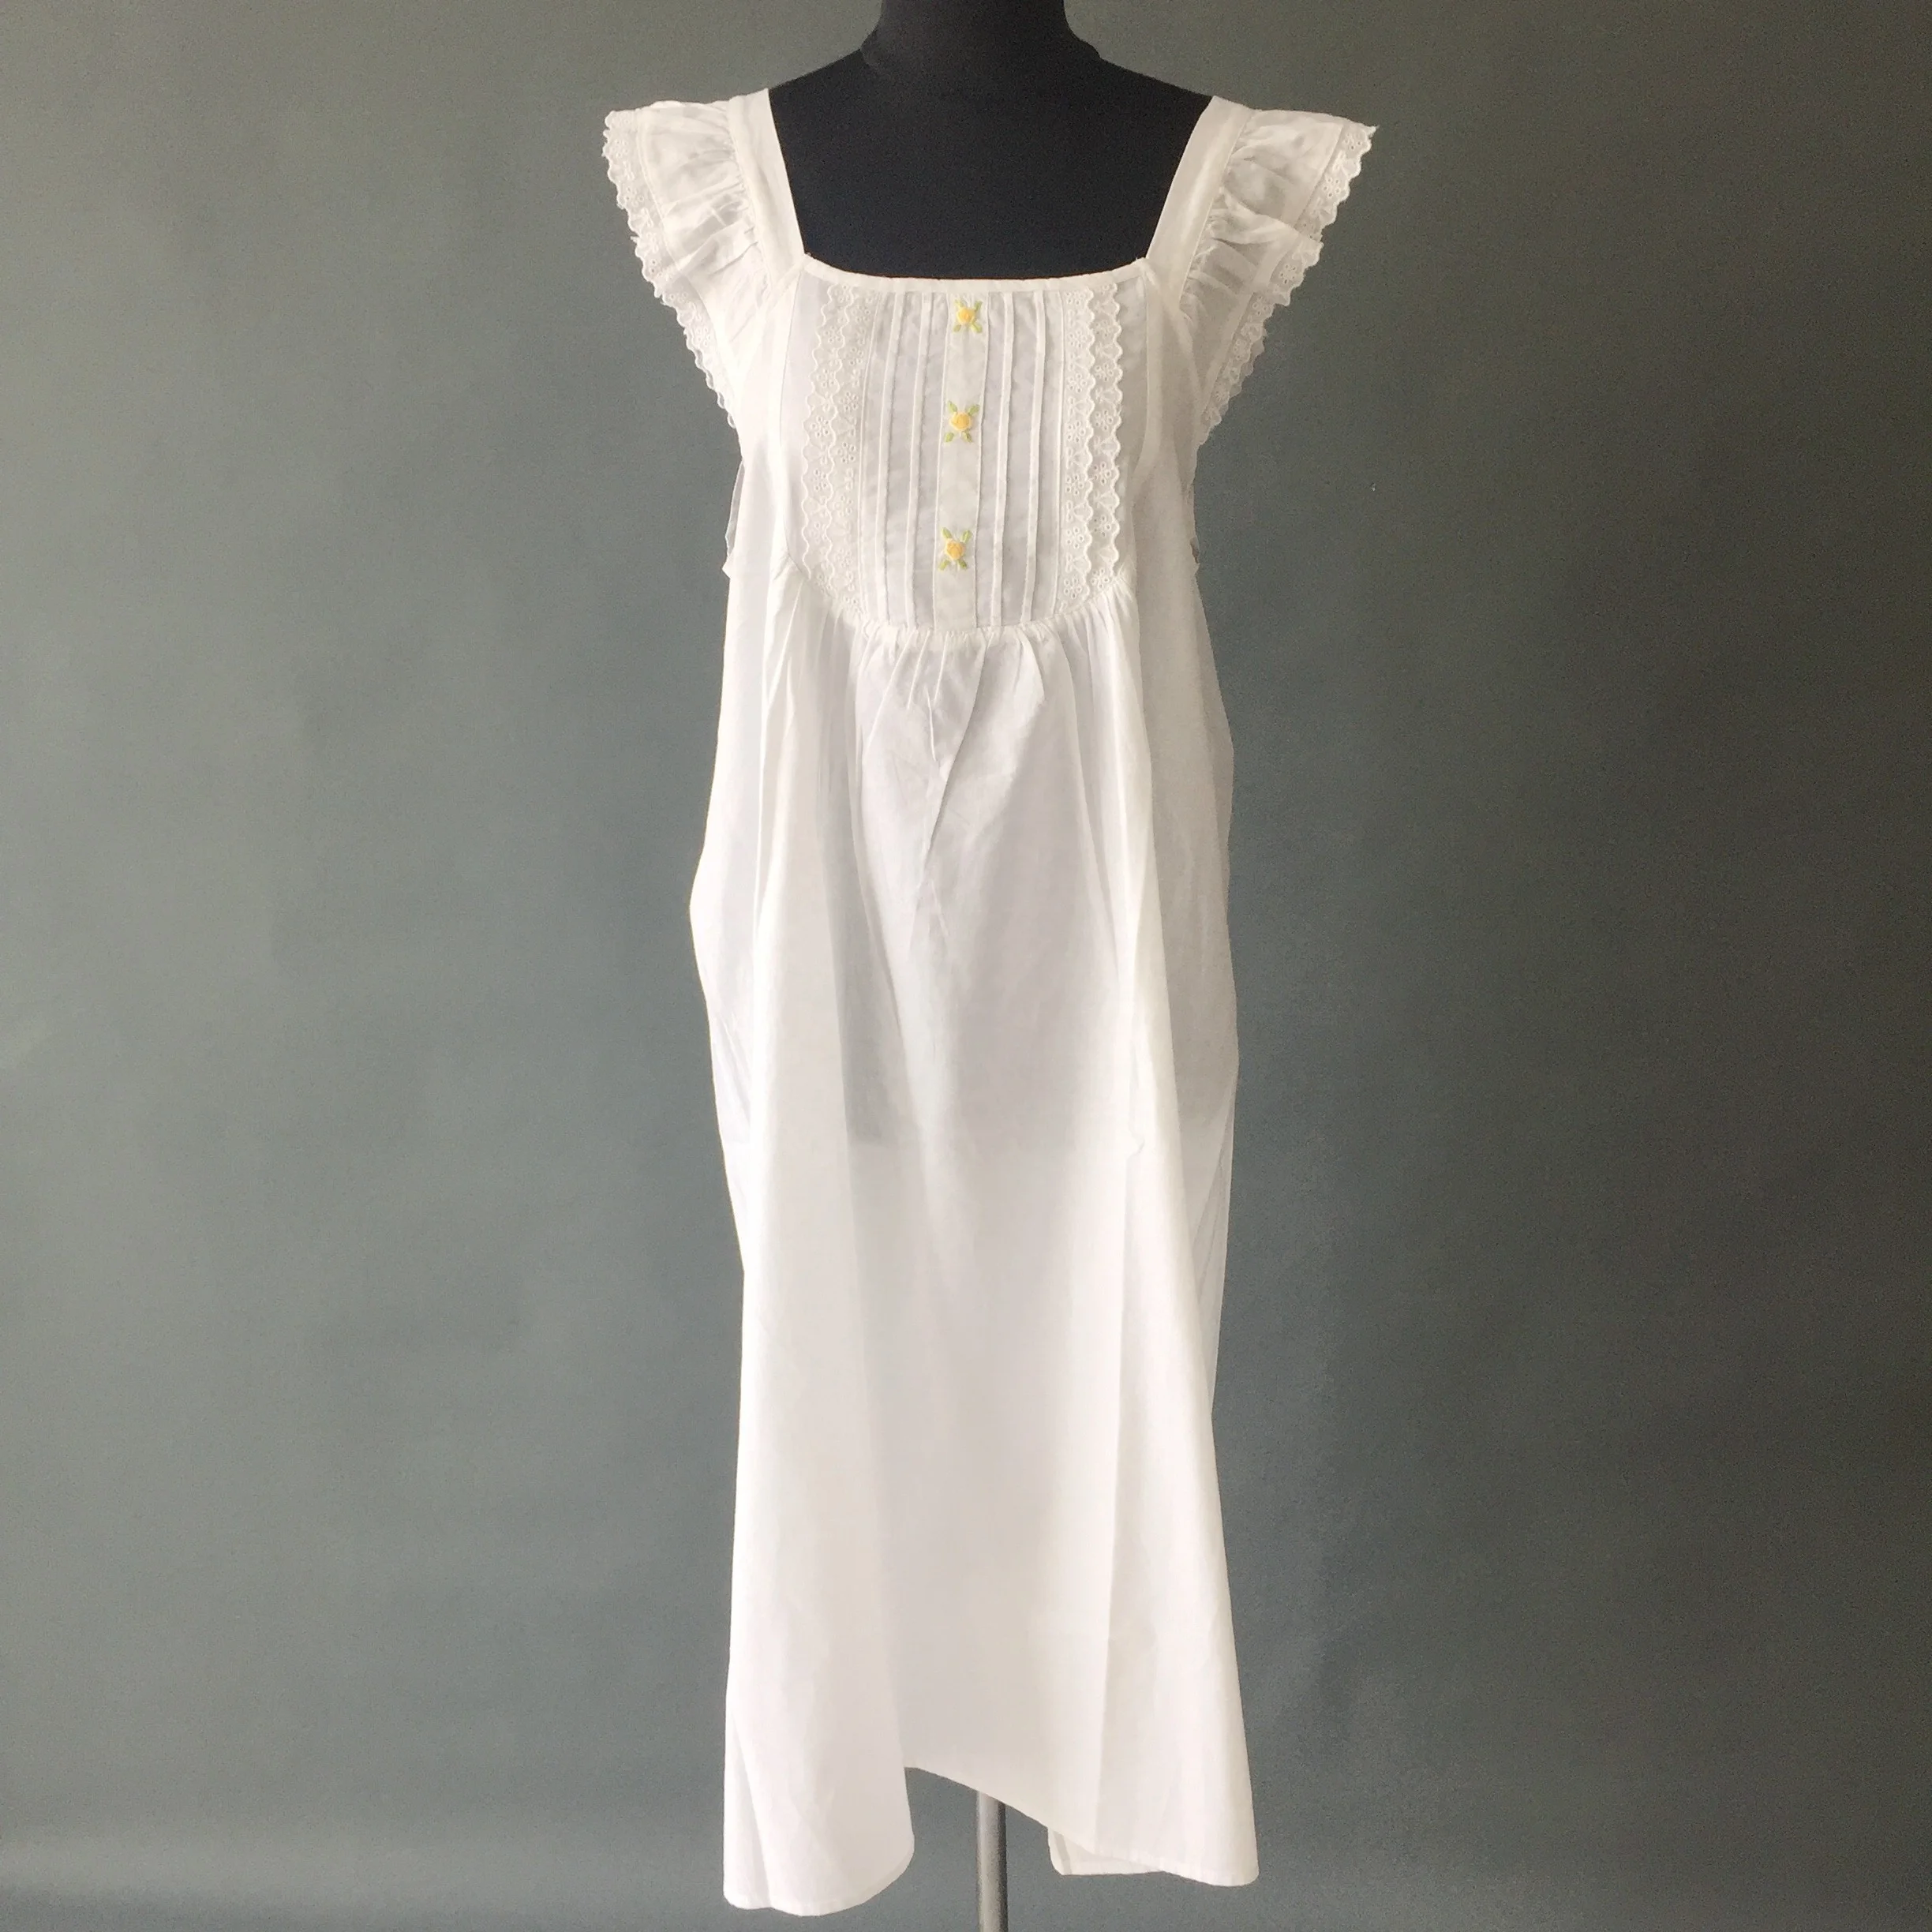 Chinese Wholesale Sleepwear Nightdress Nightgown - Buy Wholesale ...